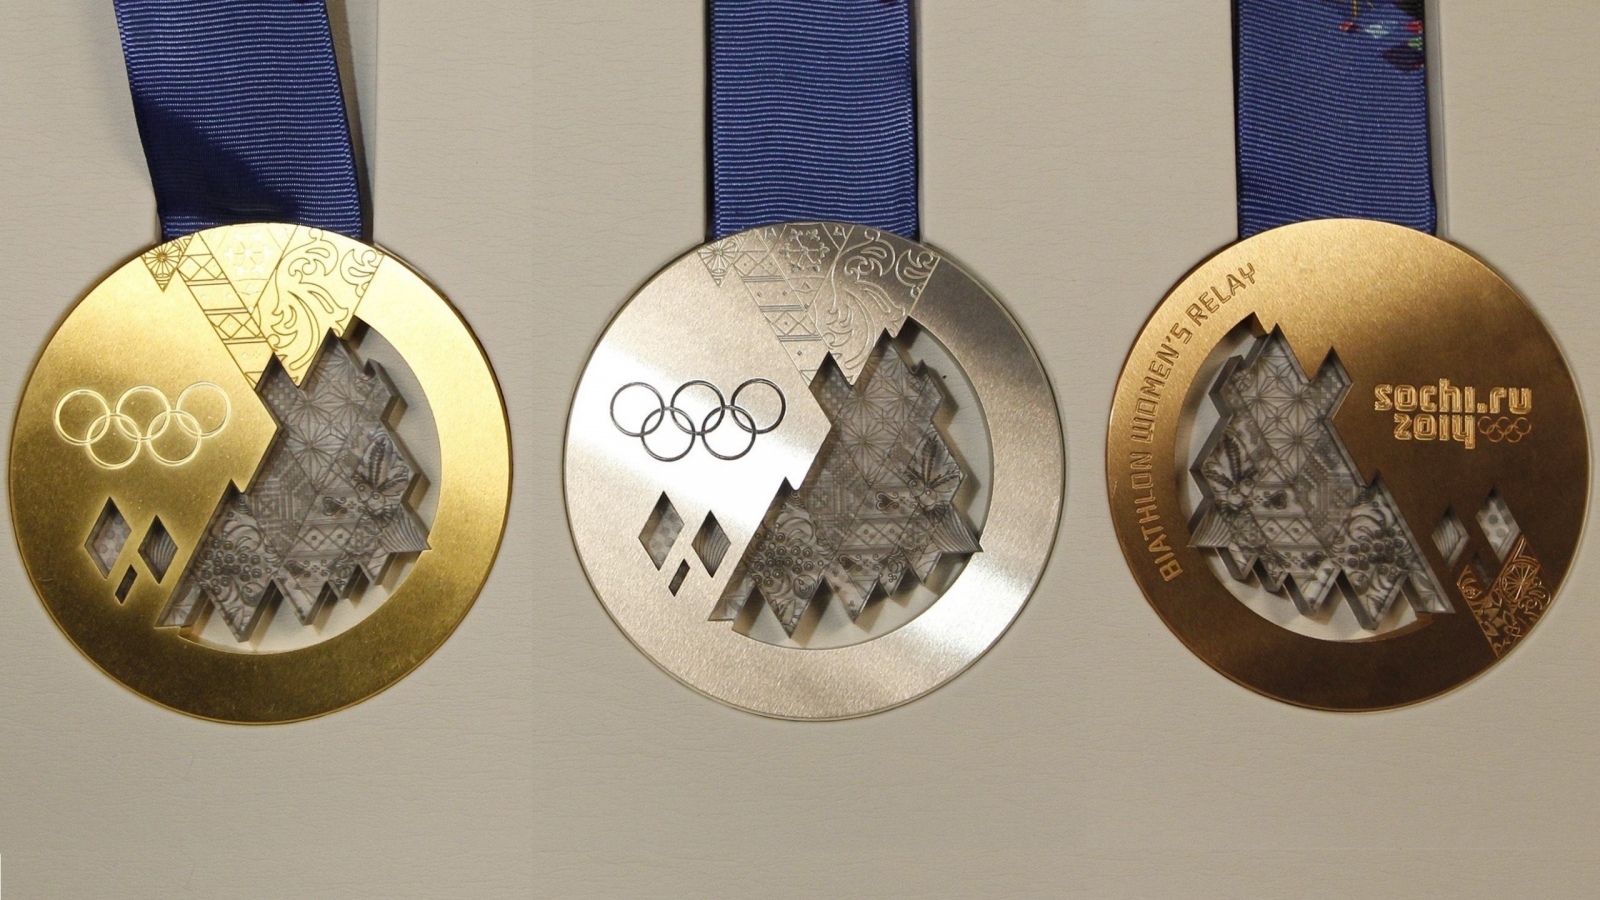 Sochi 2014 Medals for 1600 x 900 HDTV resolution